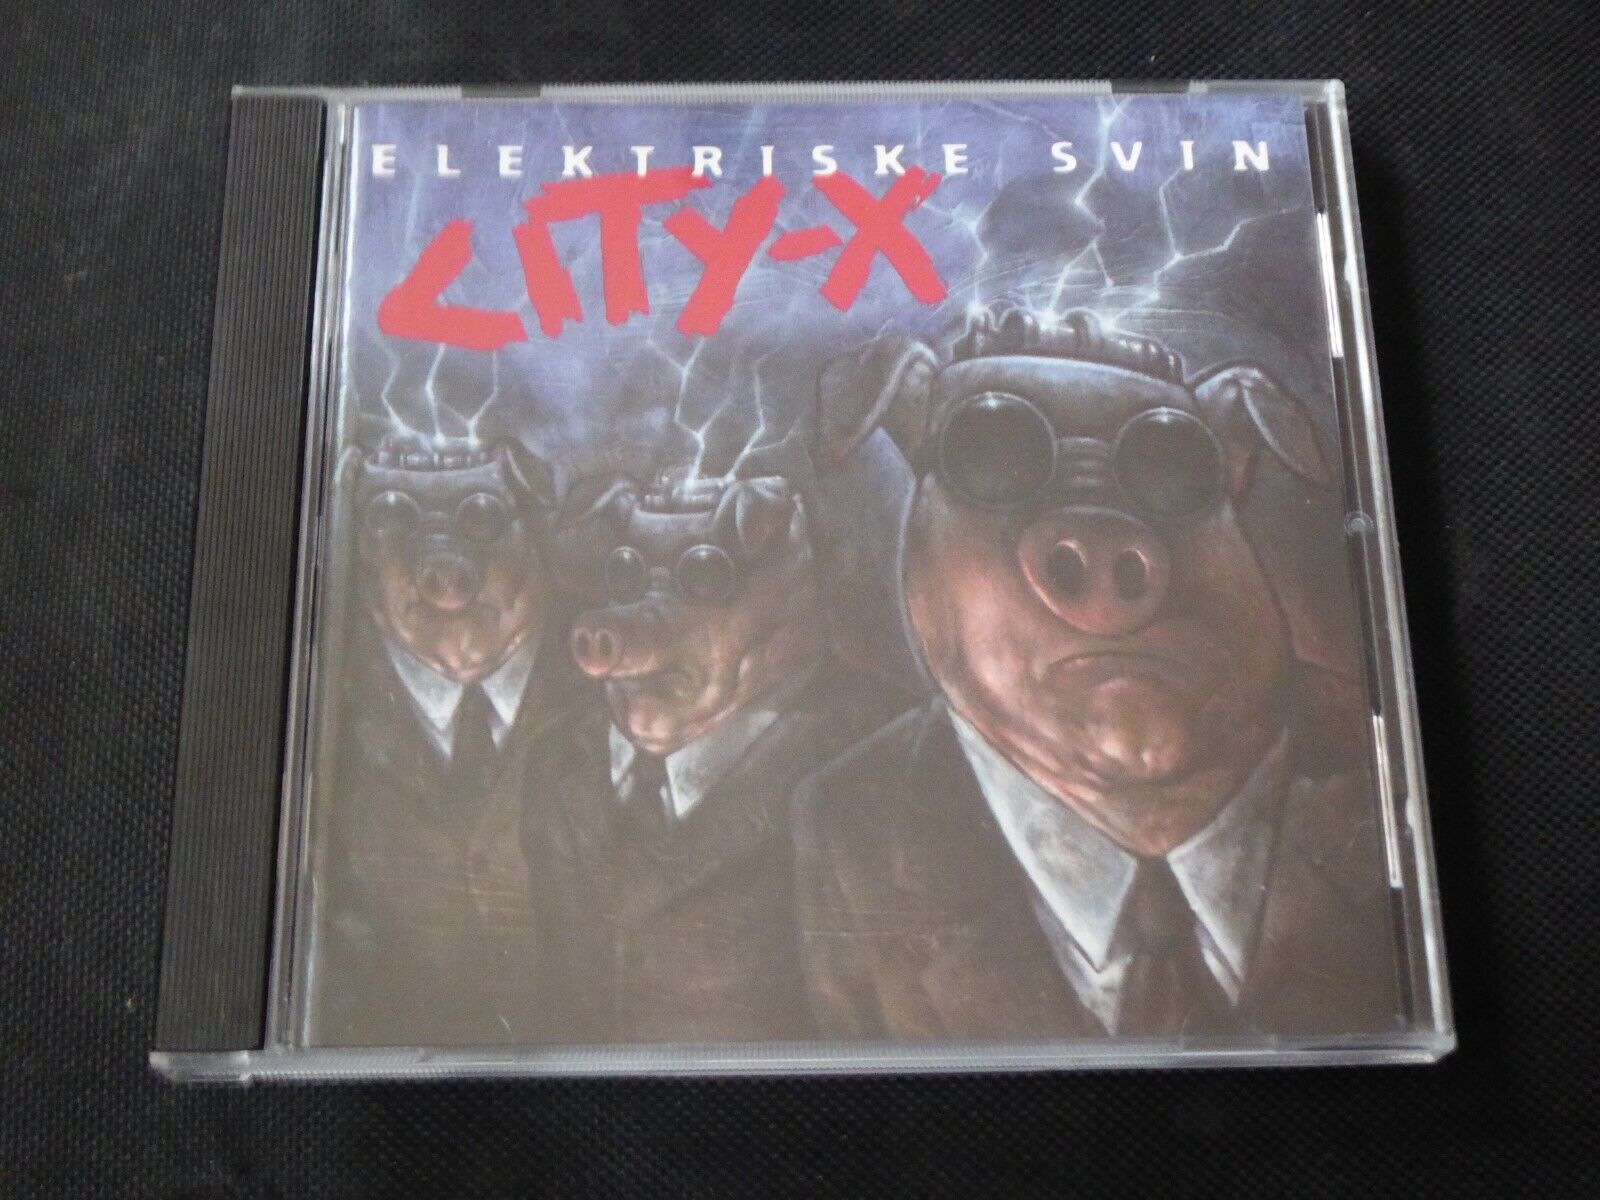 City-X - Elektriske Svin (Rare Danish Punk CD)